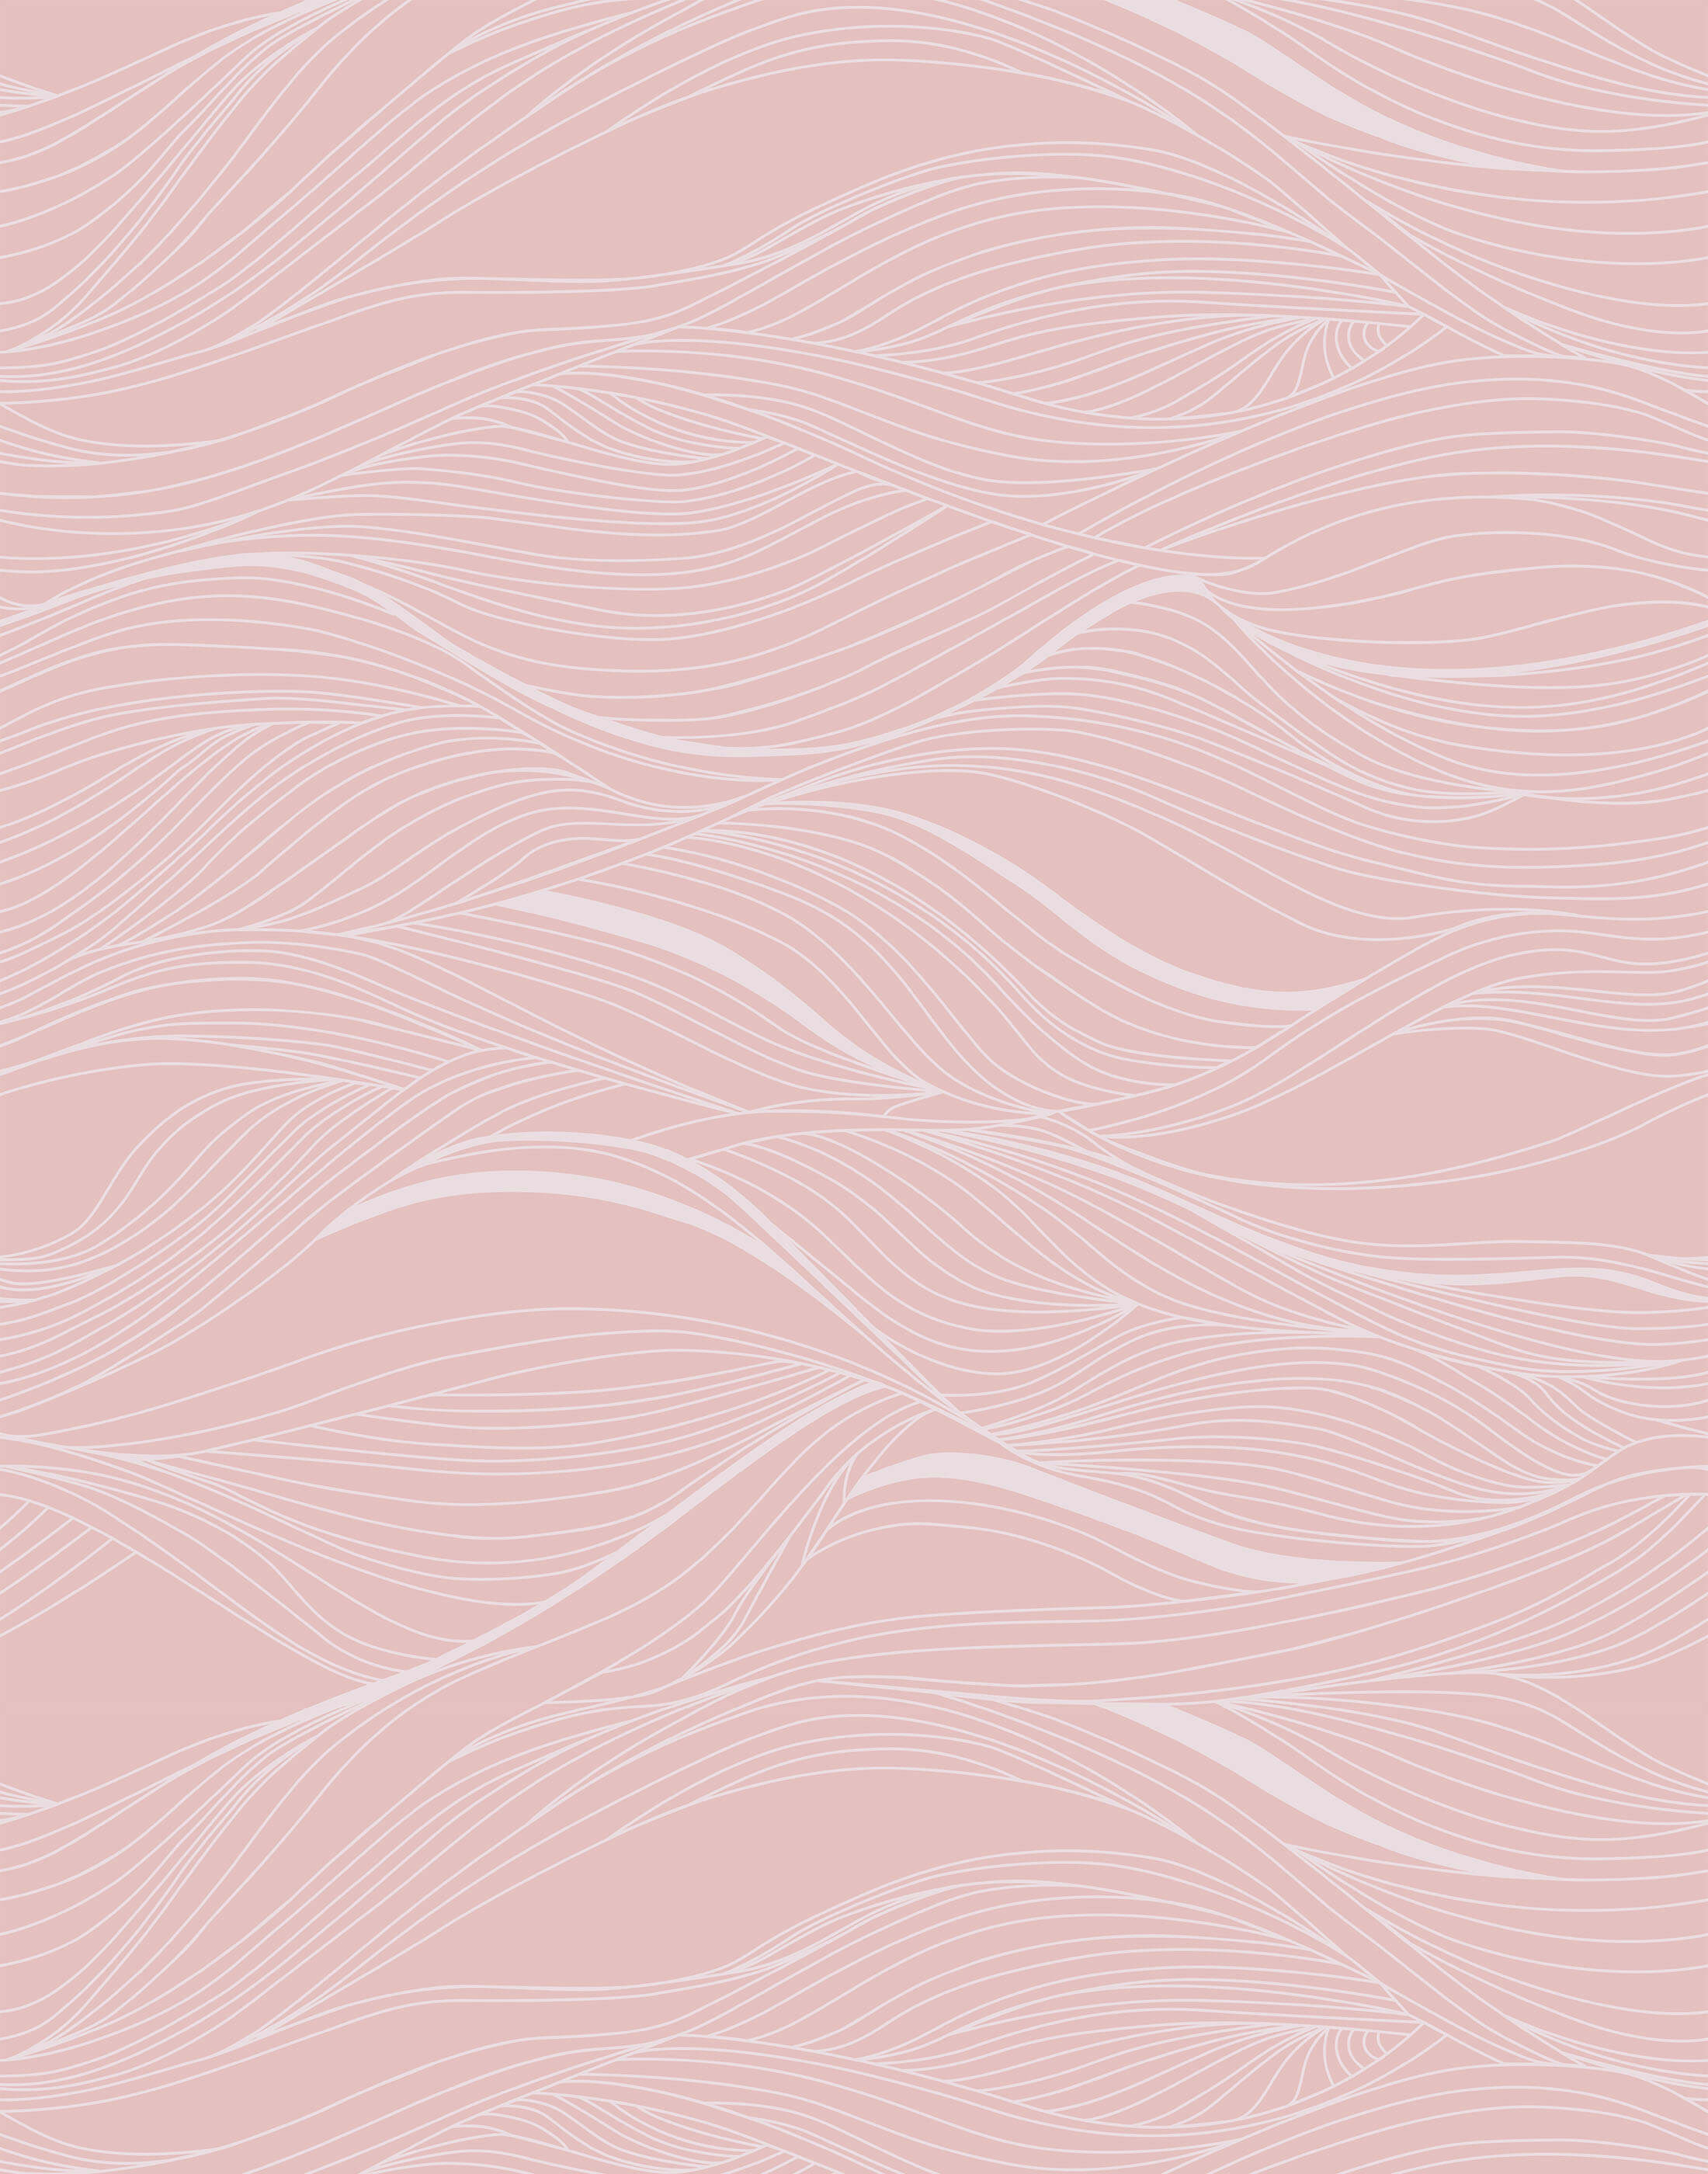 Pink Wallpapers Free HD Download 500 HQ  Unsplash